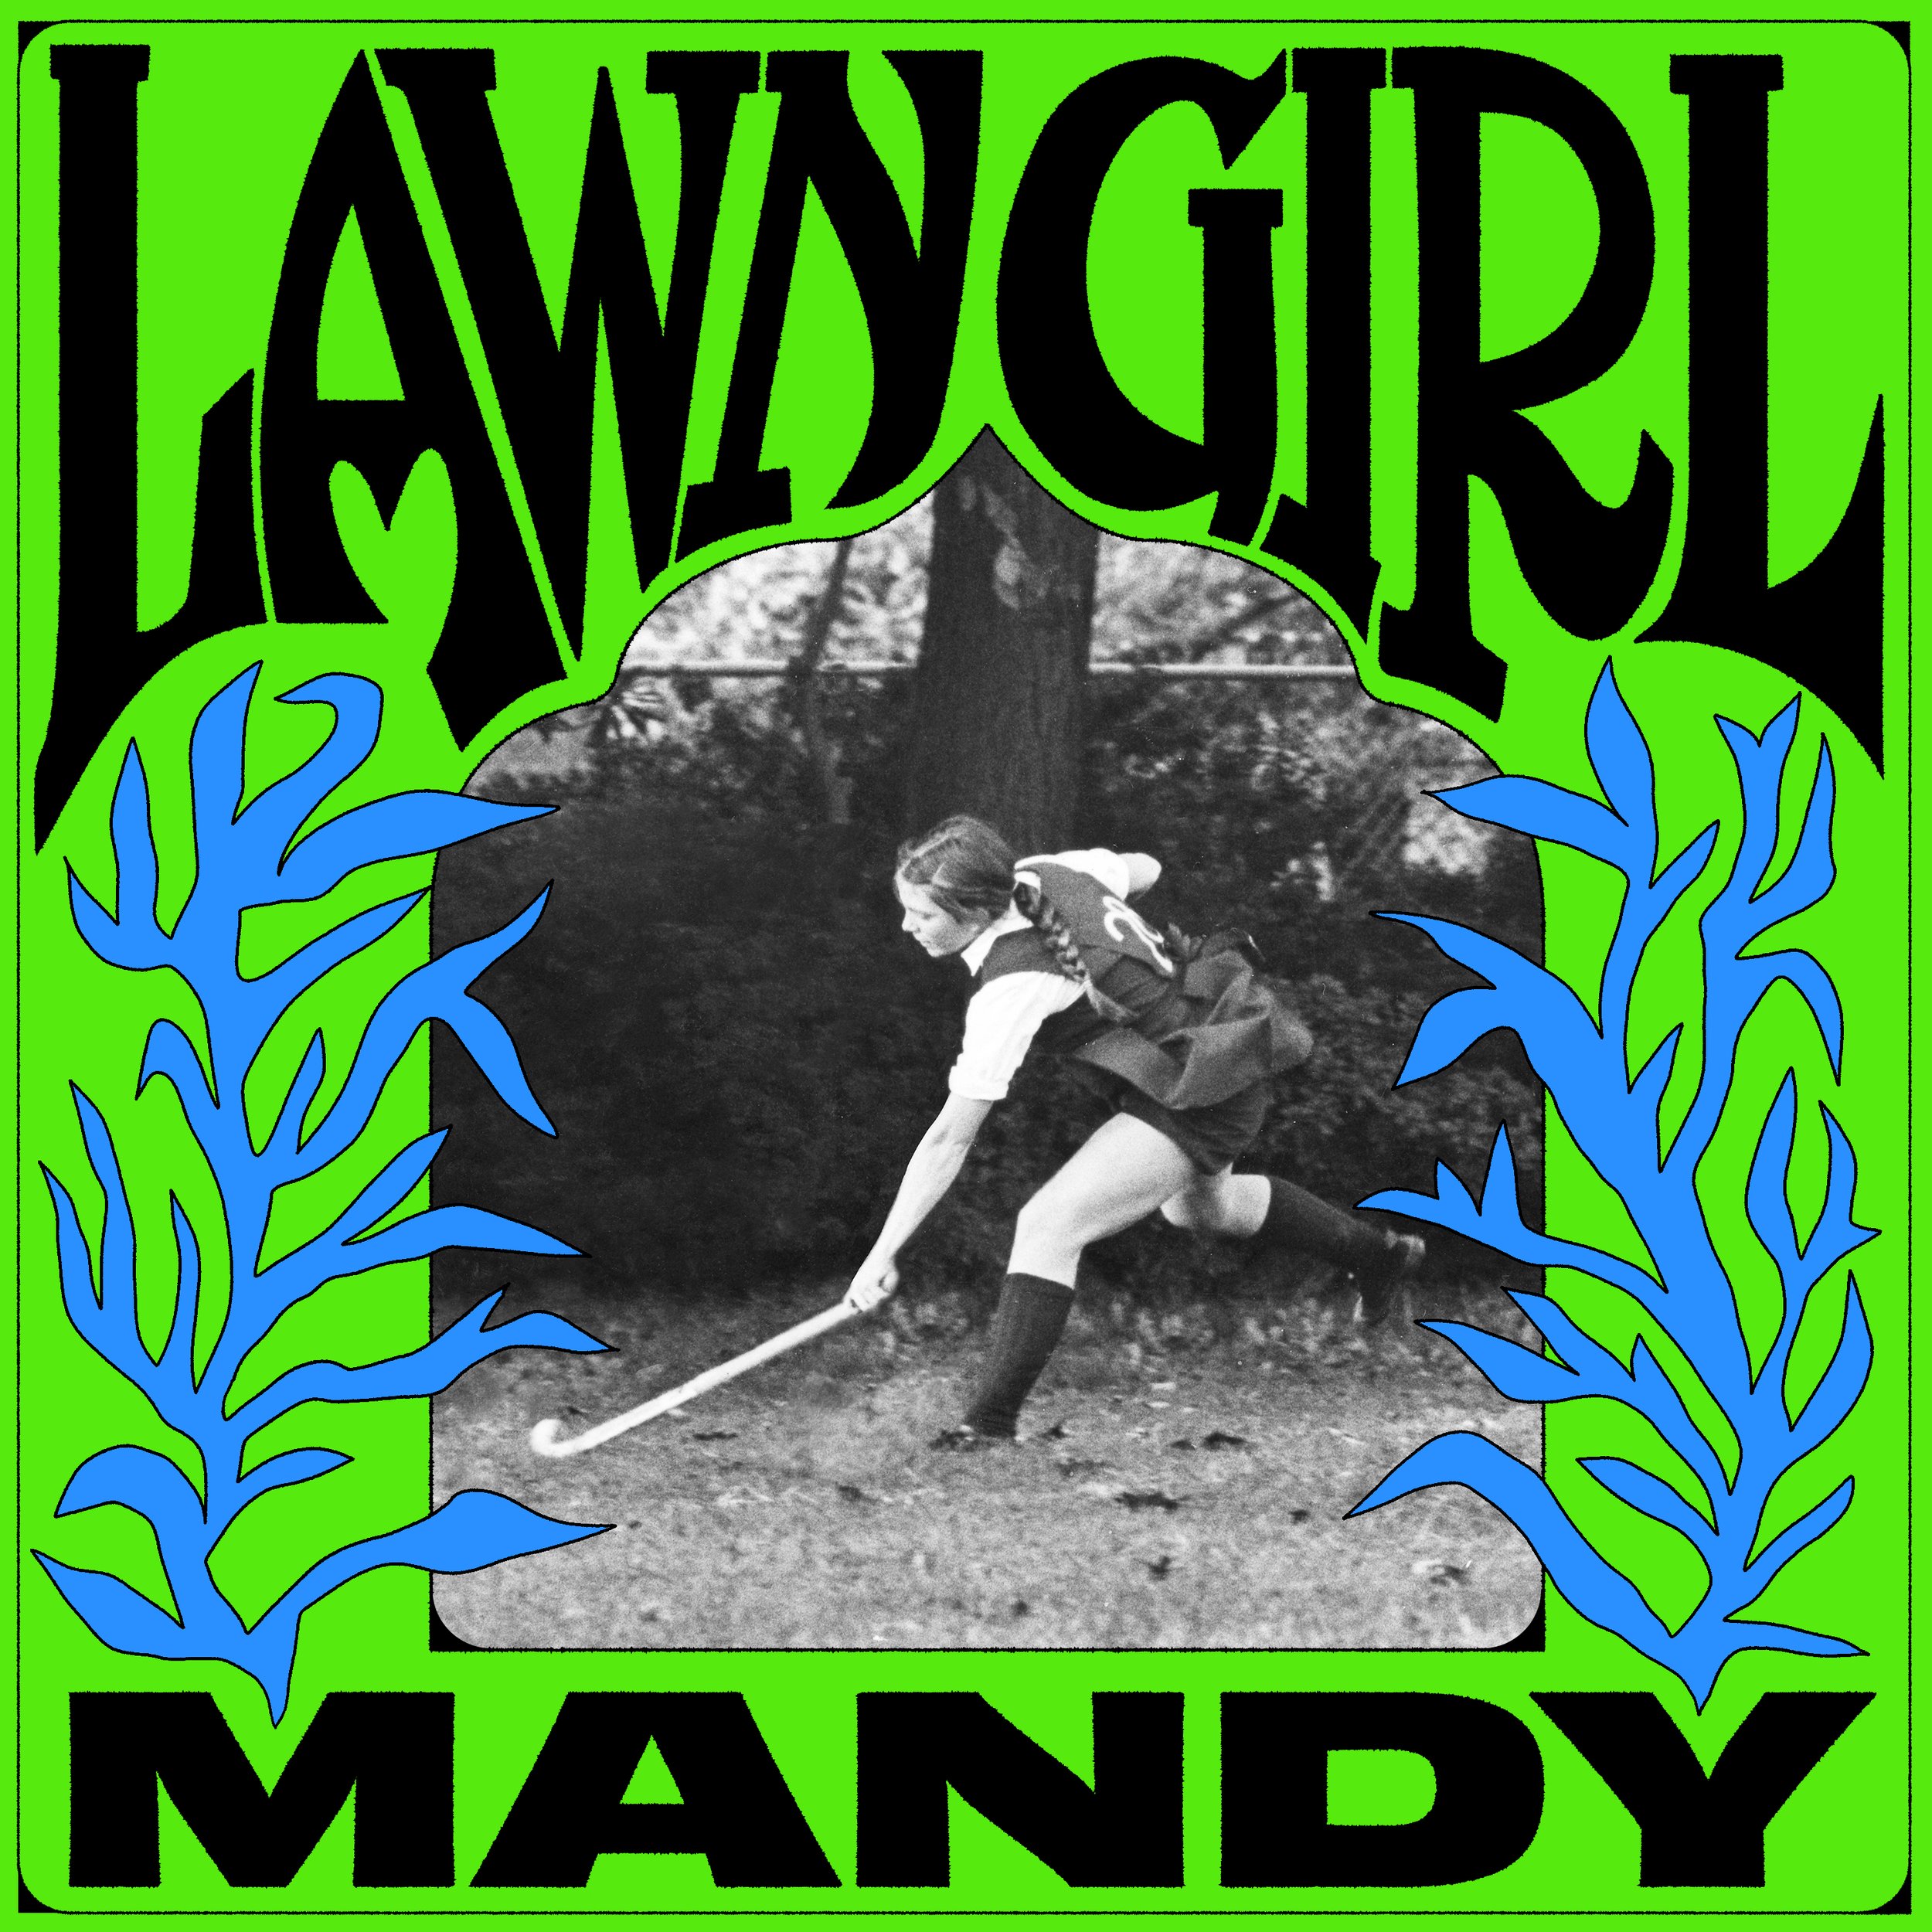 mandy lawn girl cover.jpg